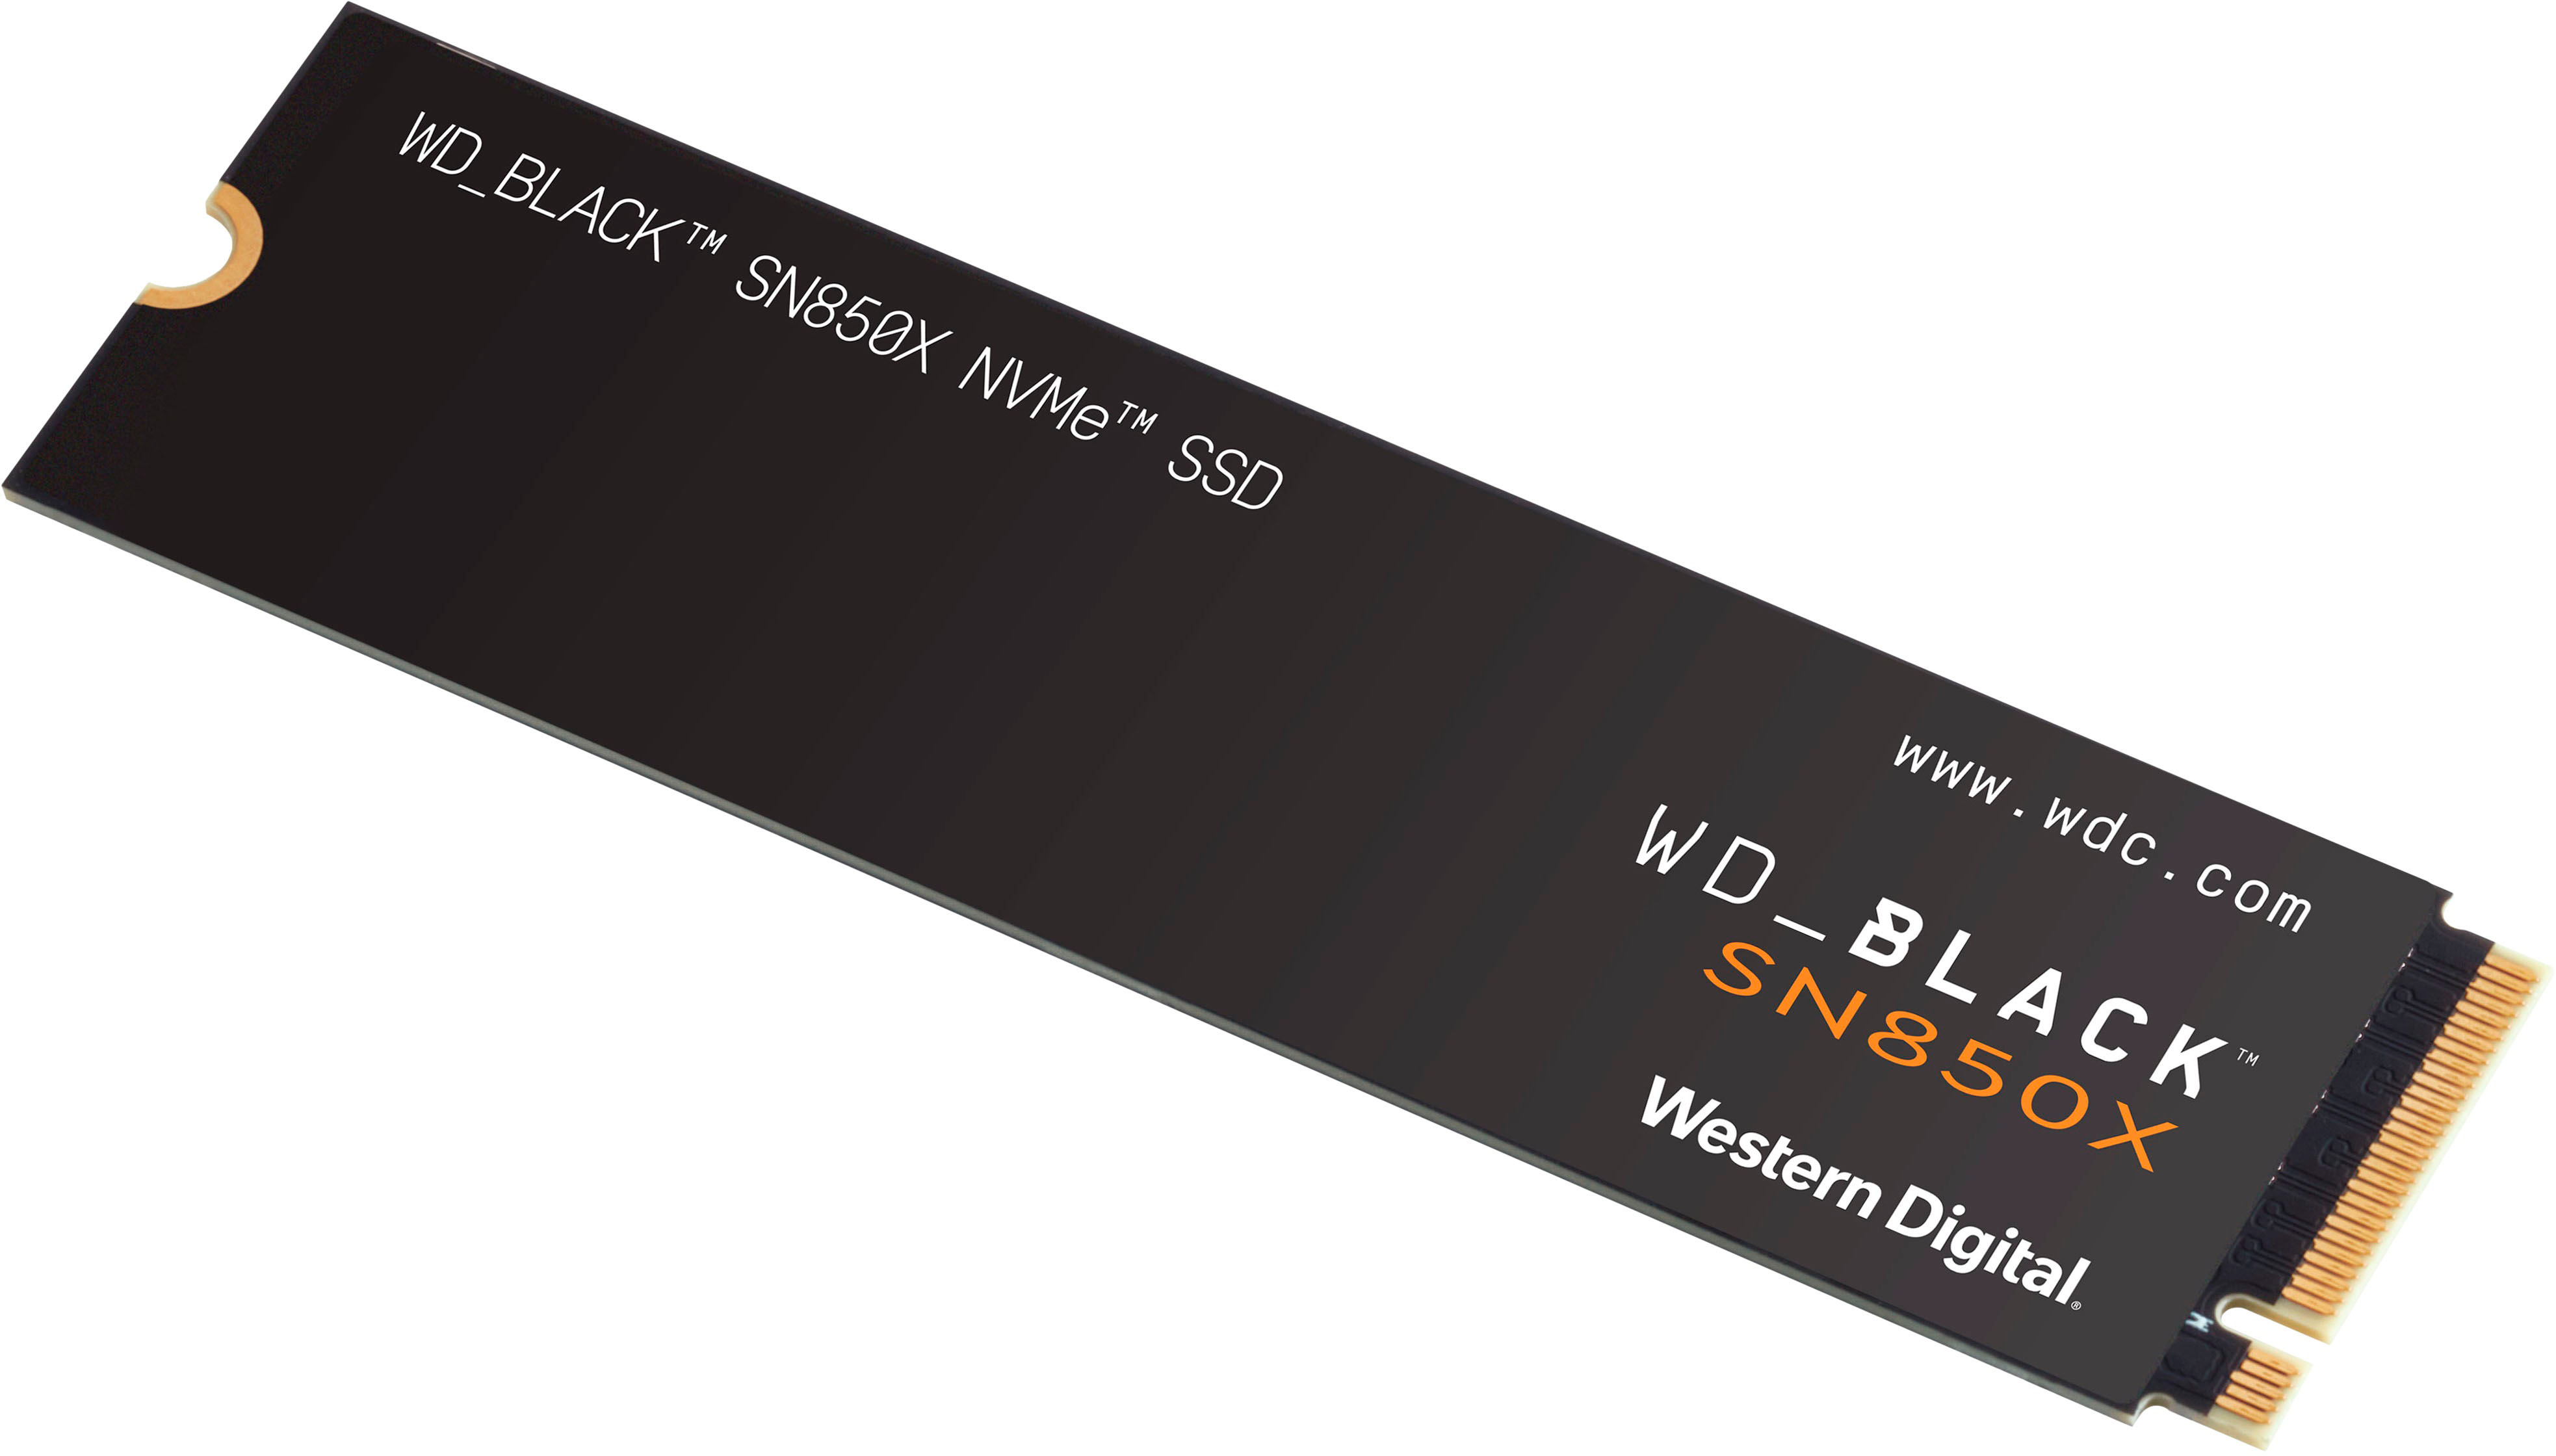 WD_BLACK™ SN850 NVMe™ SSD PCIe® Gen4 for PC or Laptop